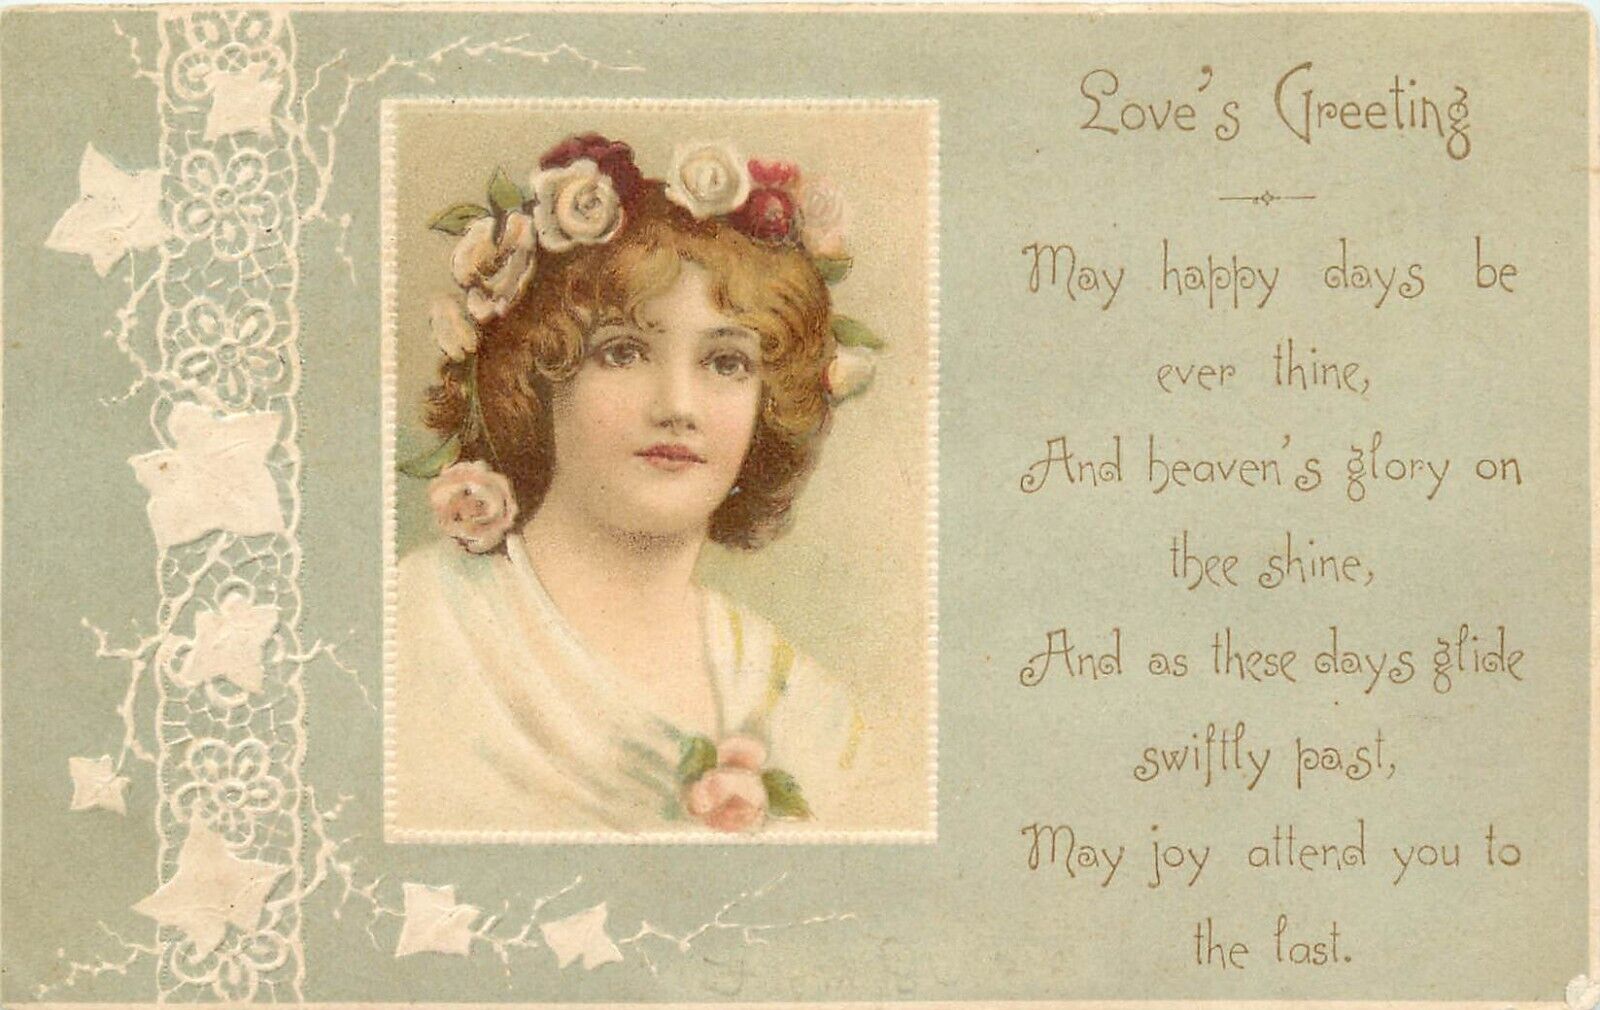 c1905 Art Postcard, Love\'s Greeting, Beautiful Girl w/Roses in Hair, Ivy Border